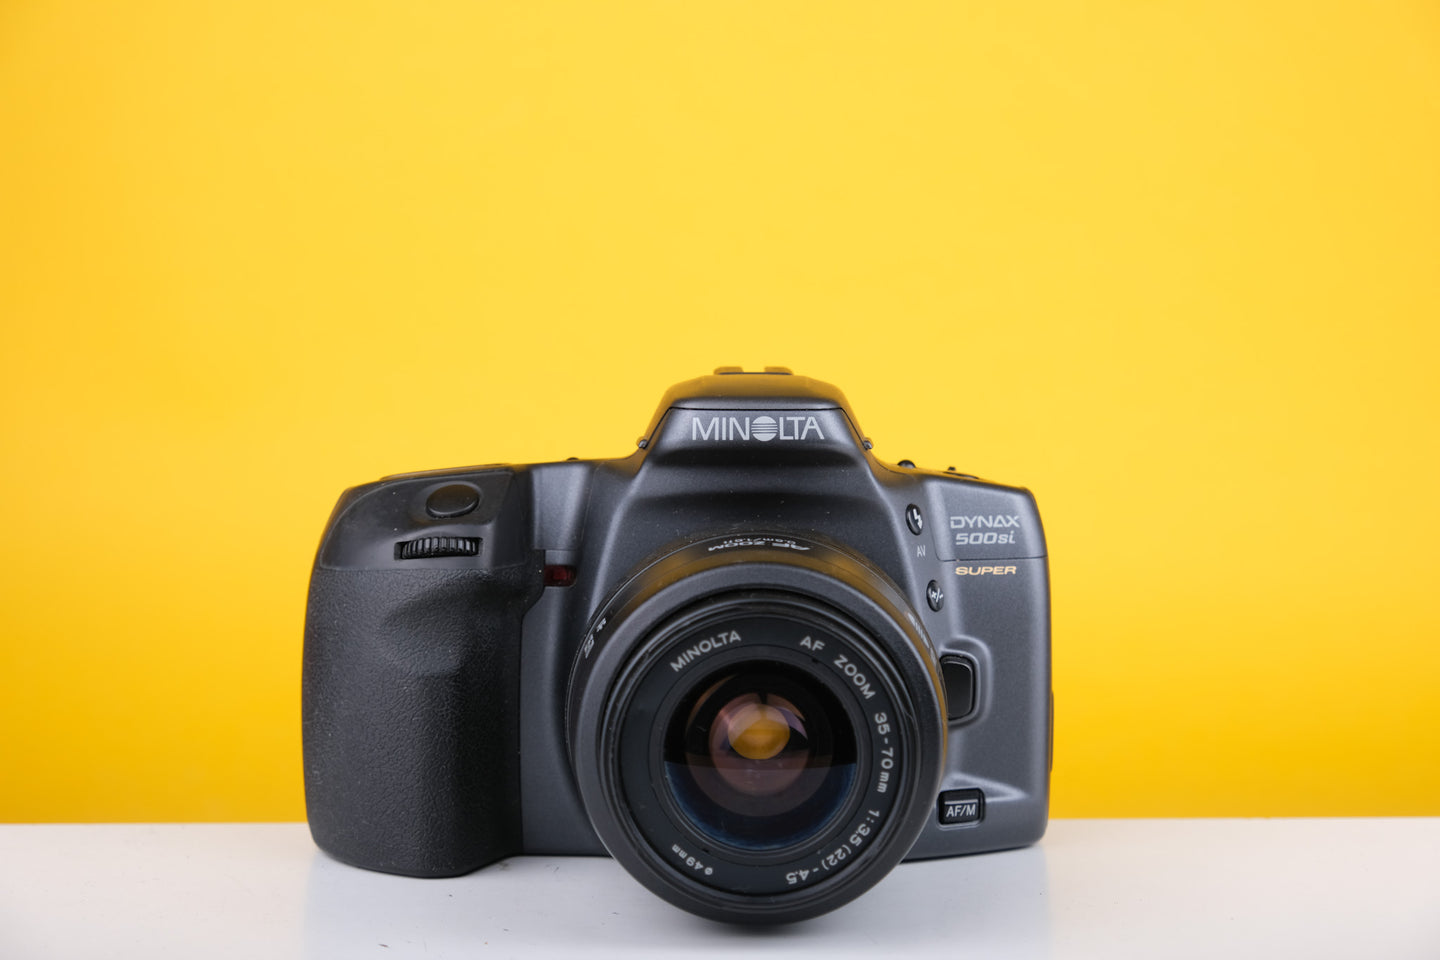 Minolta Dynax 500si Super 35mm SLR Film camera with 35-70mm Lens